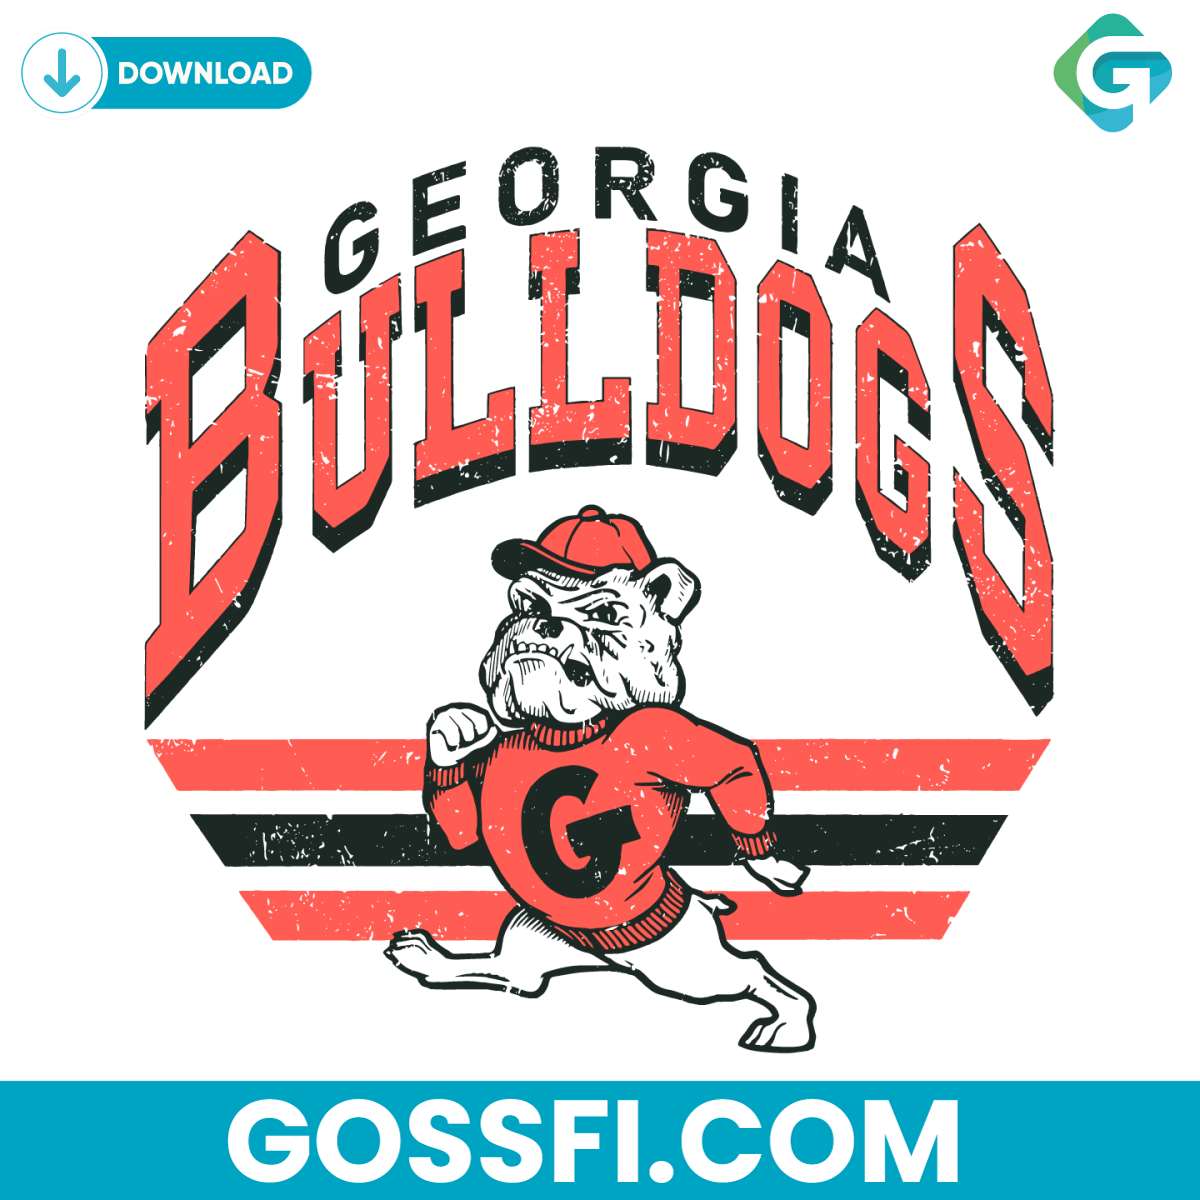 retro-georgia-bulldogs-ncaa-svg-digital-download